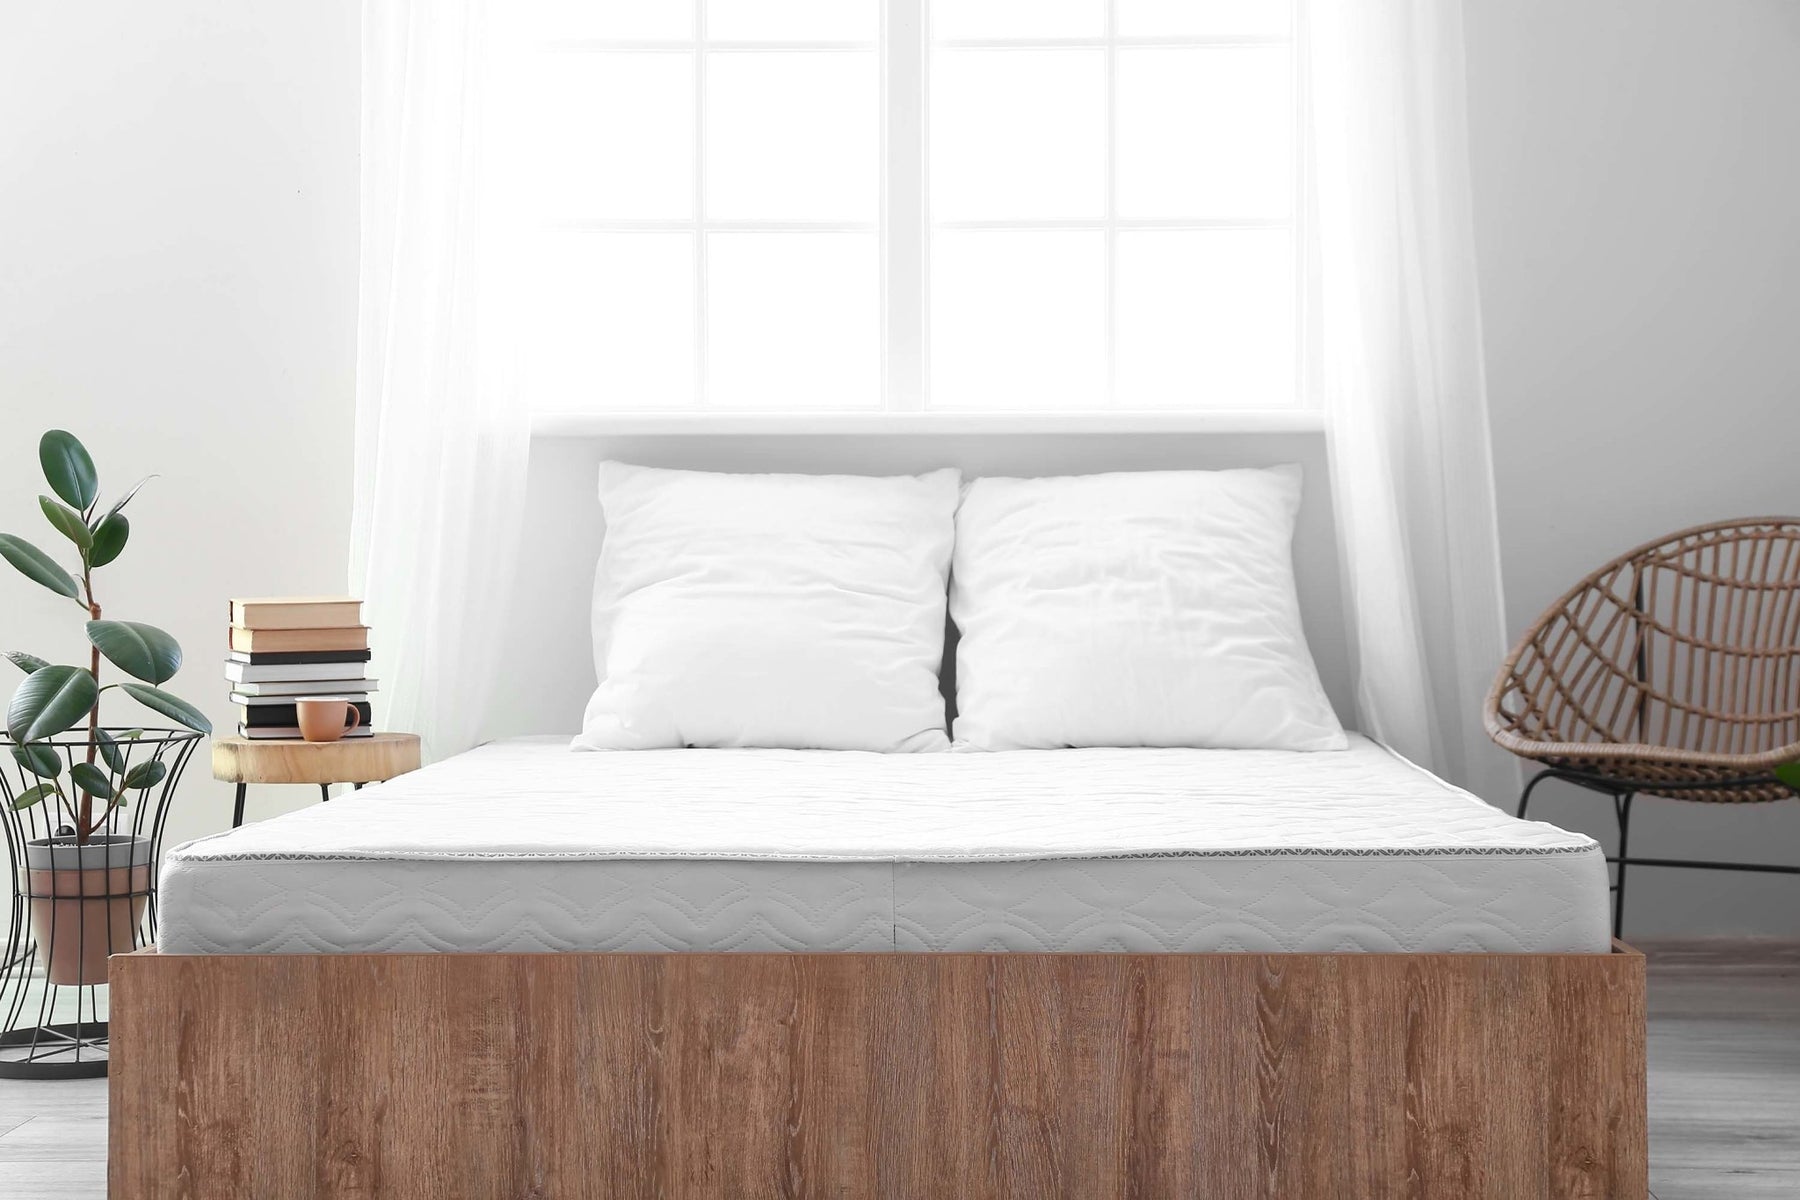 How RV Beds Maximize Comfort